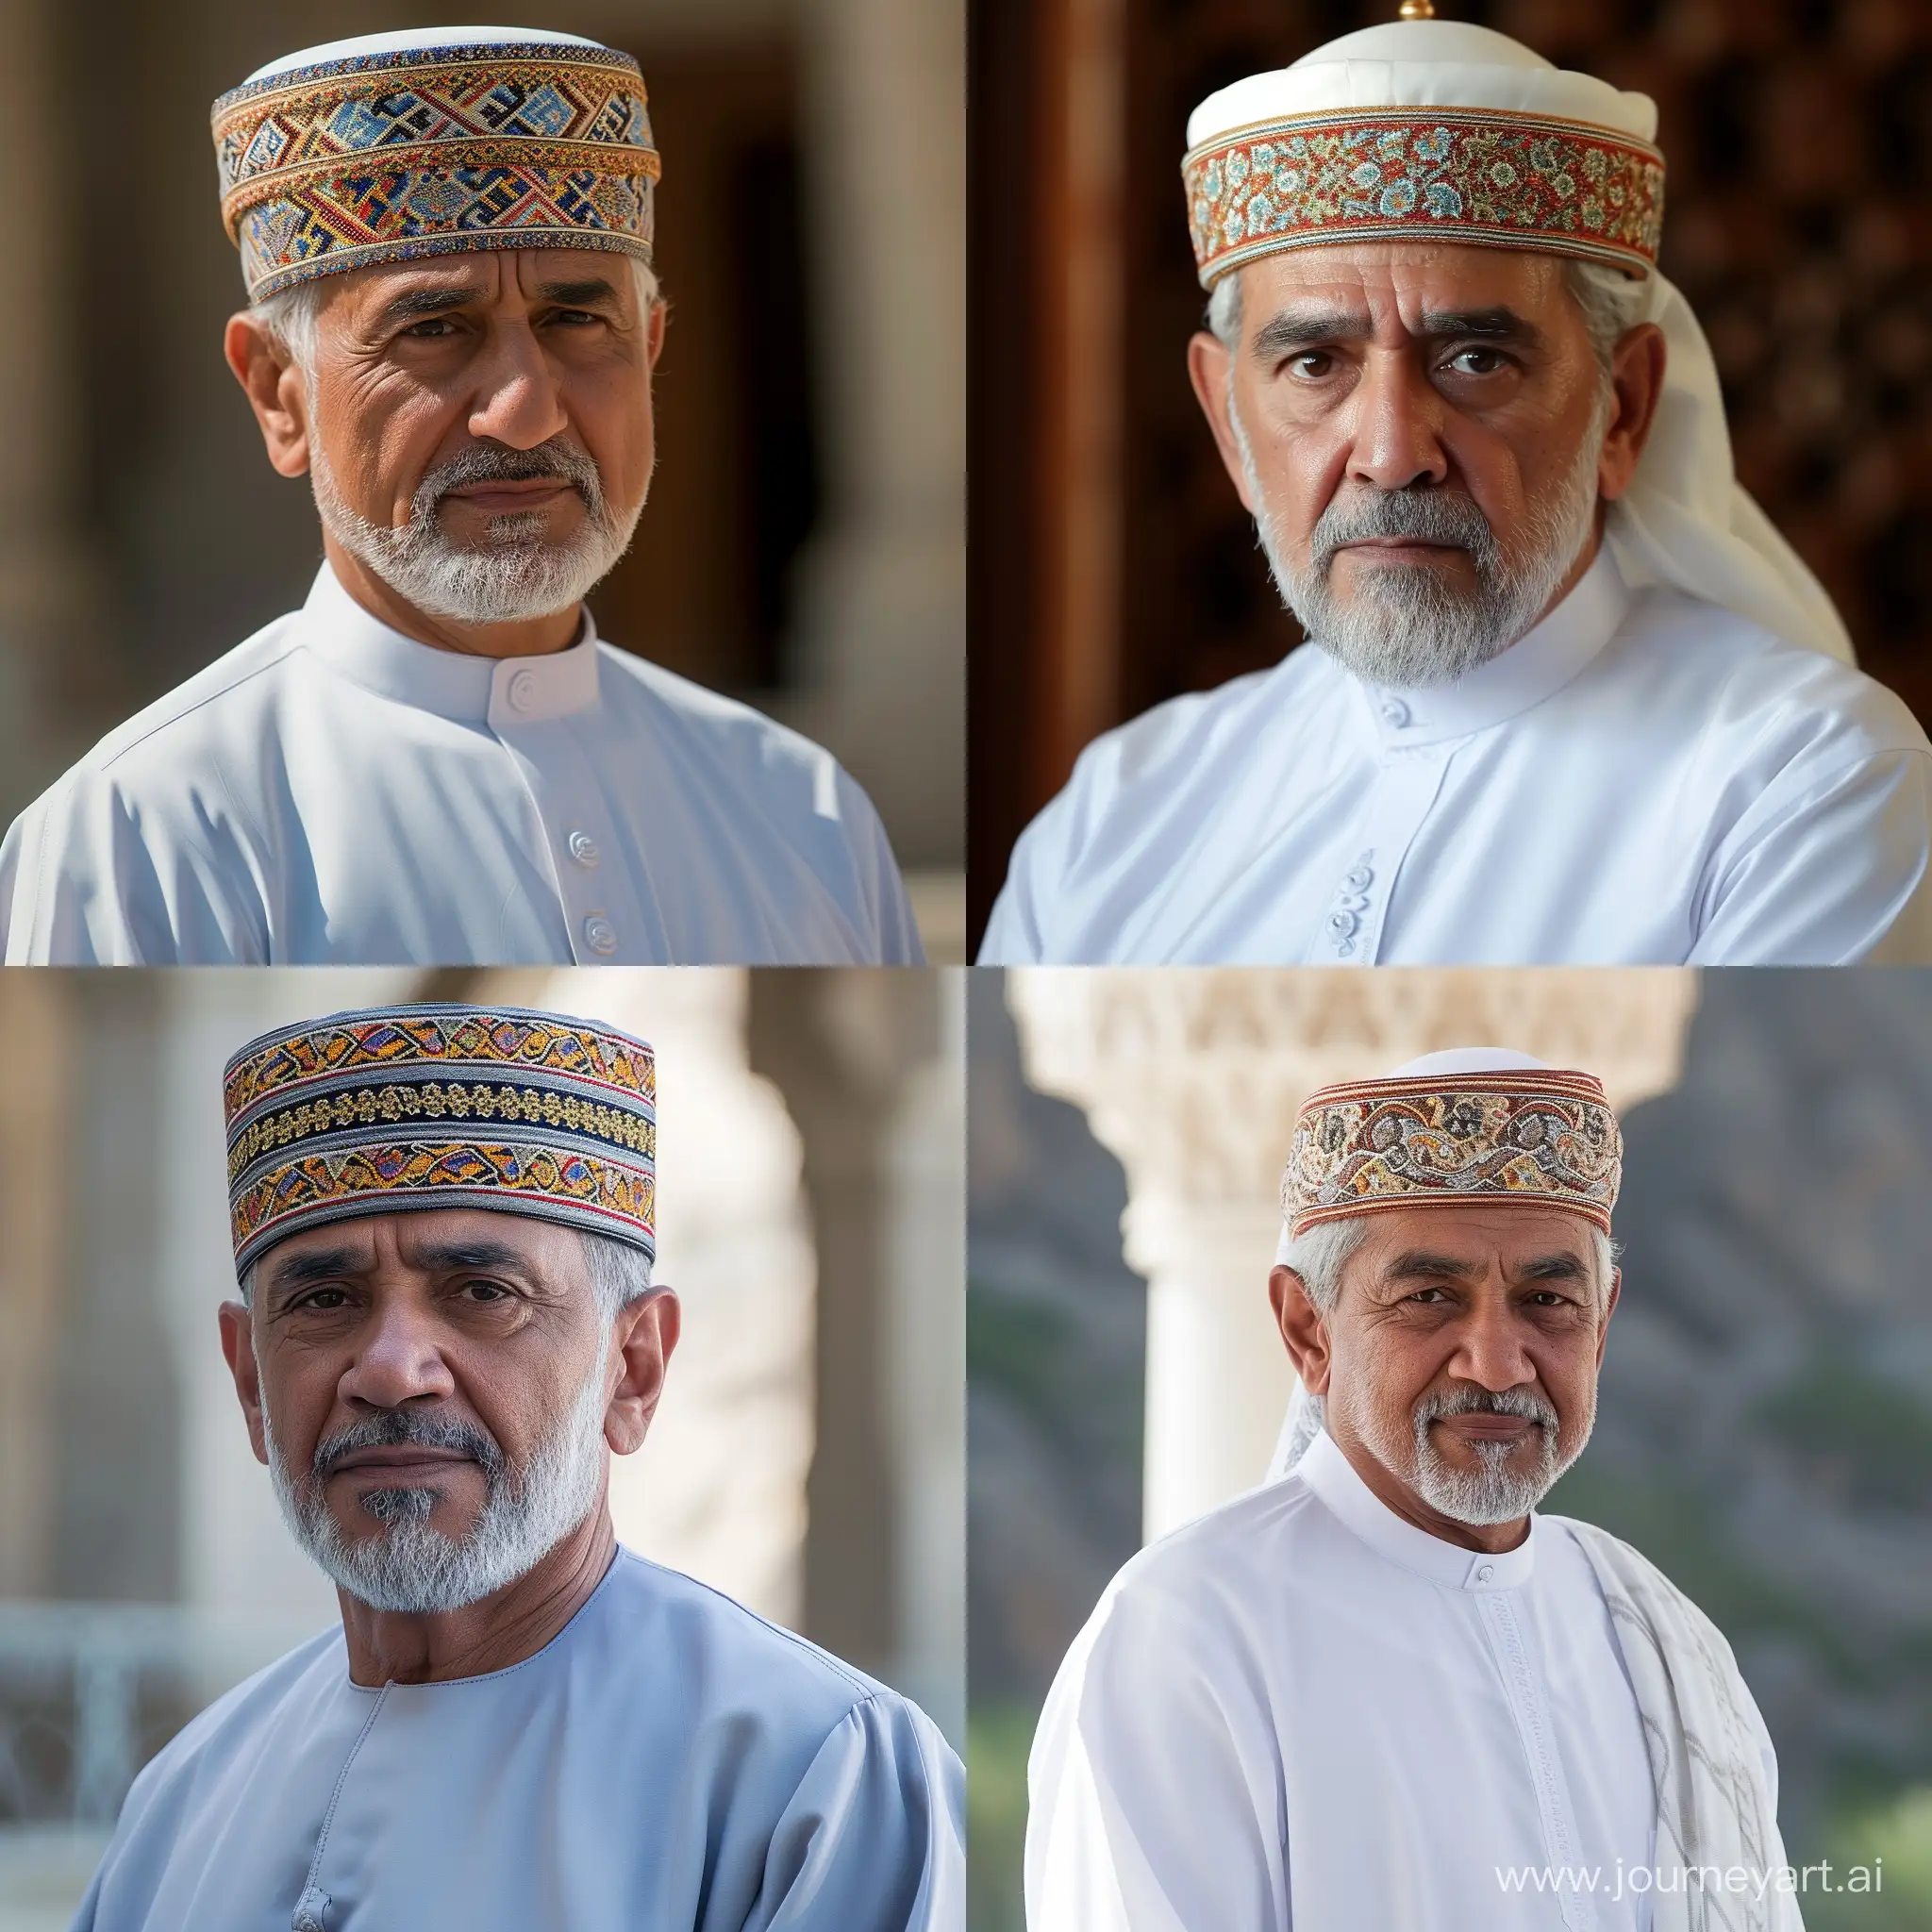 Haitham bin Tariq Al Said is Sultan and Prime Minister of Oman